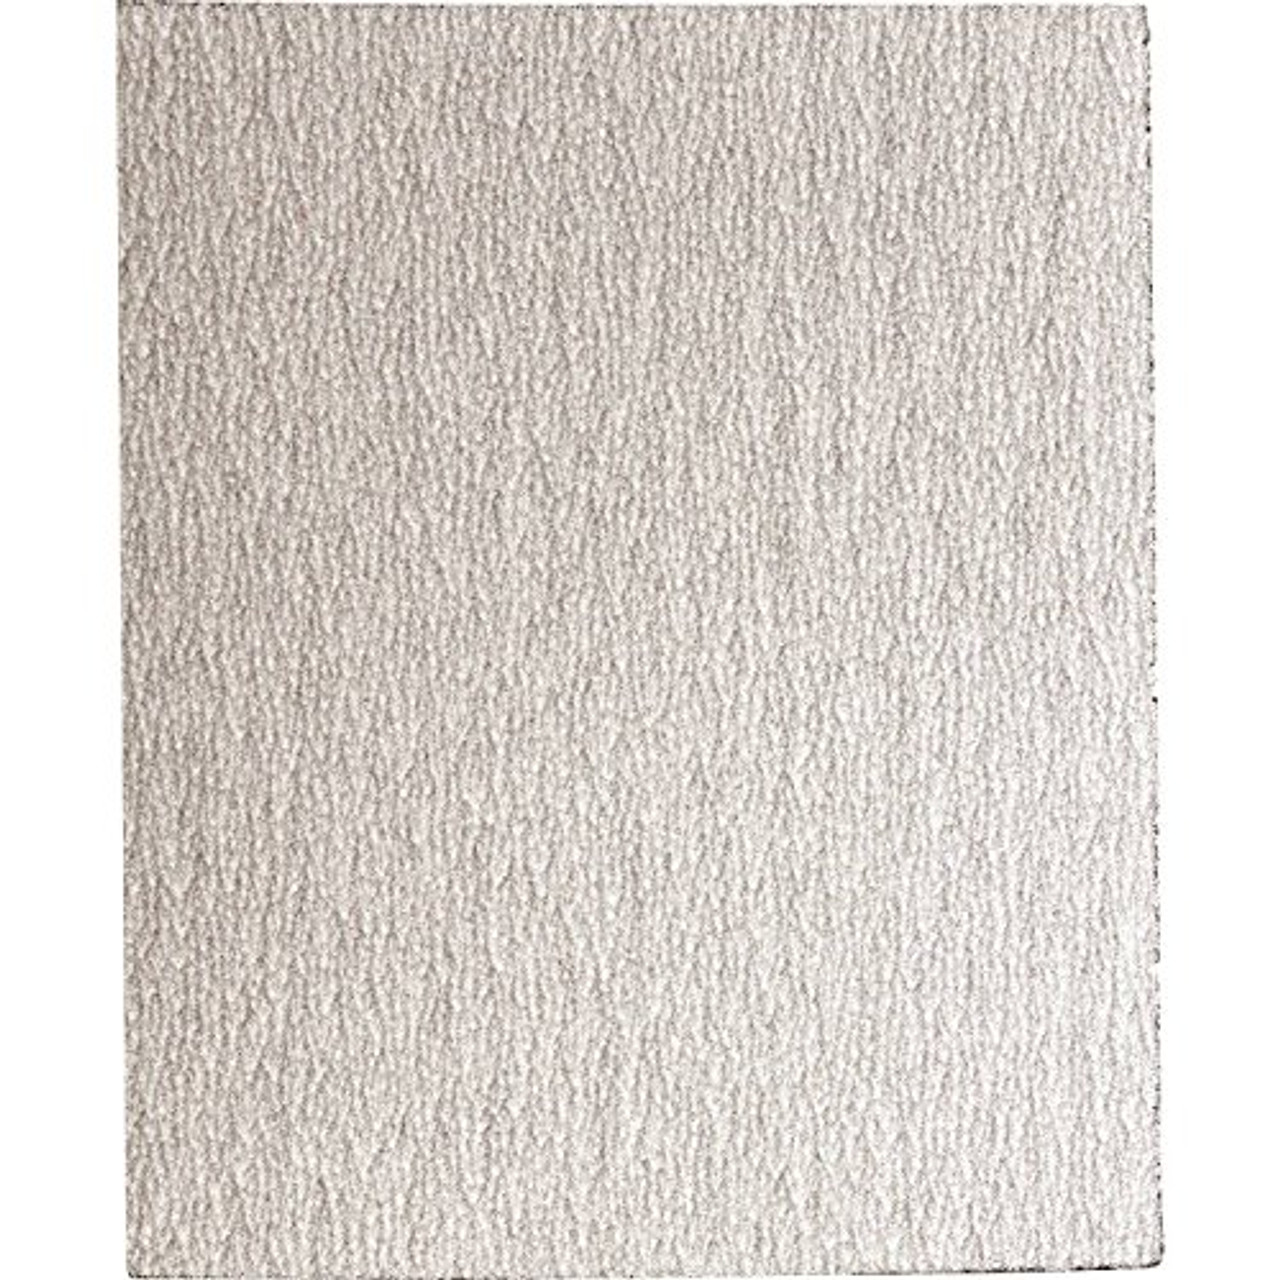 Makita - 742510-8-5 A, 100 Grit Sandpaper Sheets 4-1/2" x 5-1/2", 5-Pack